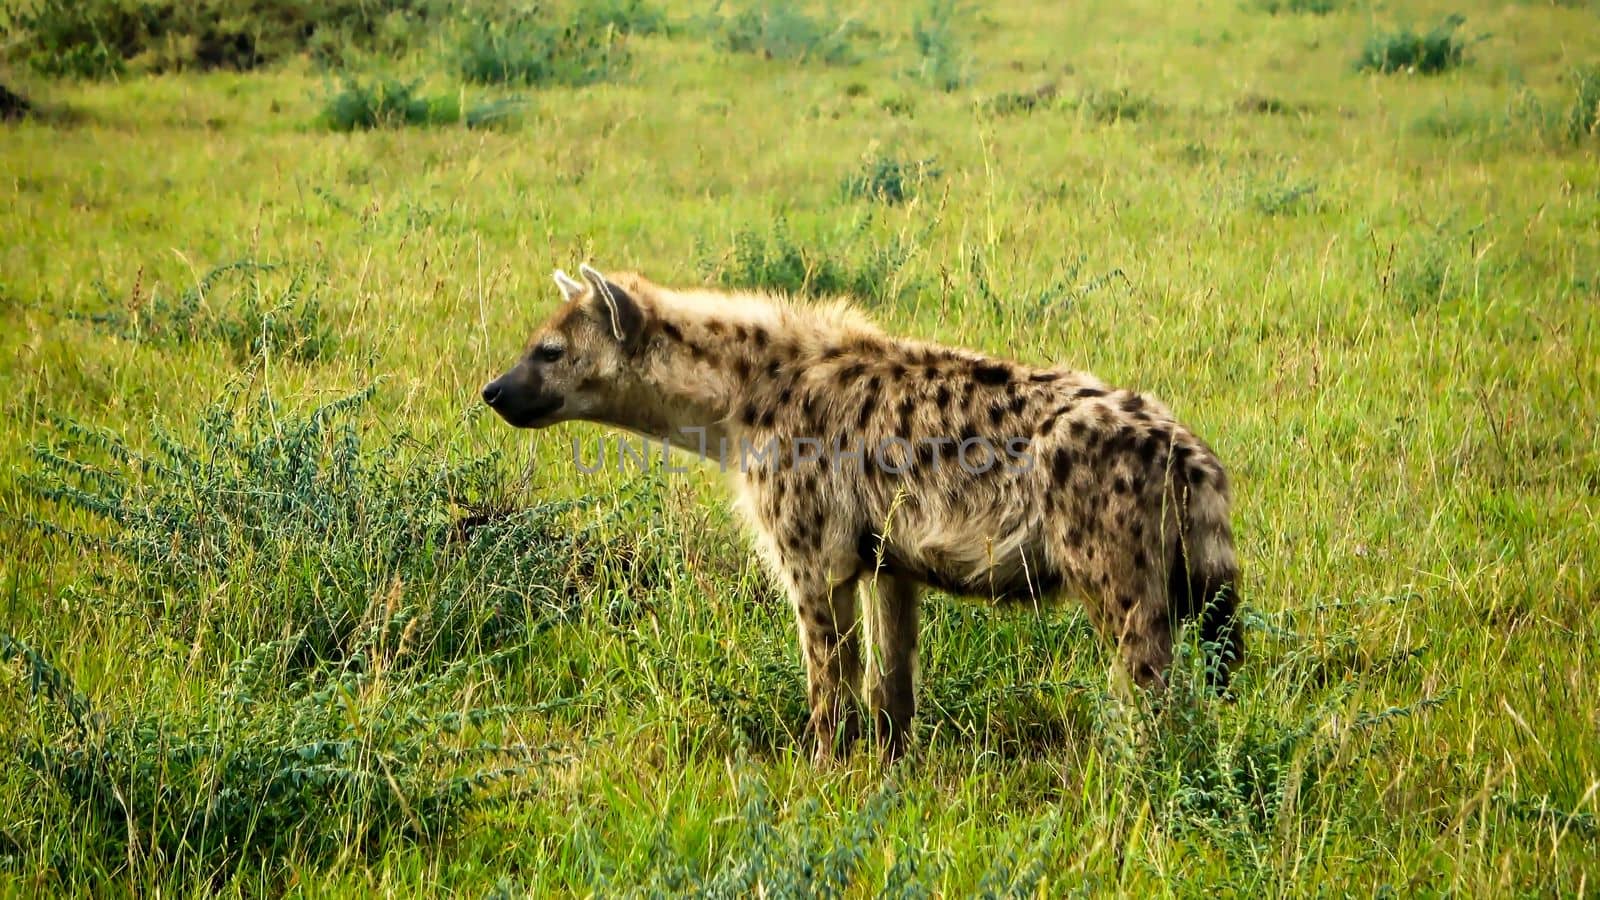 Wild hyenas in the savannah of Africa